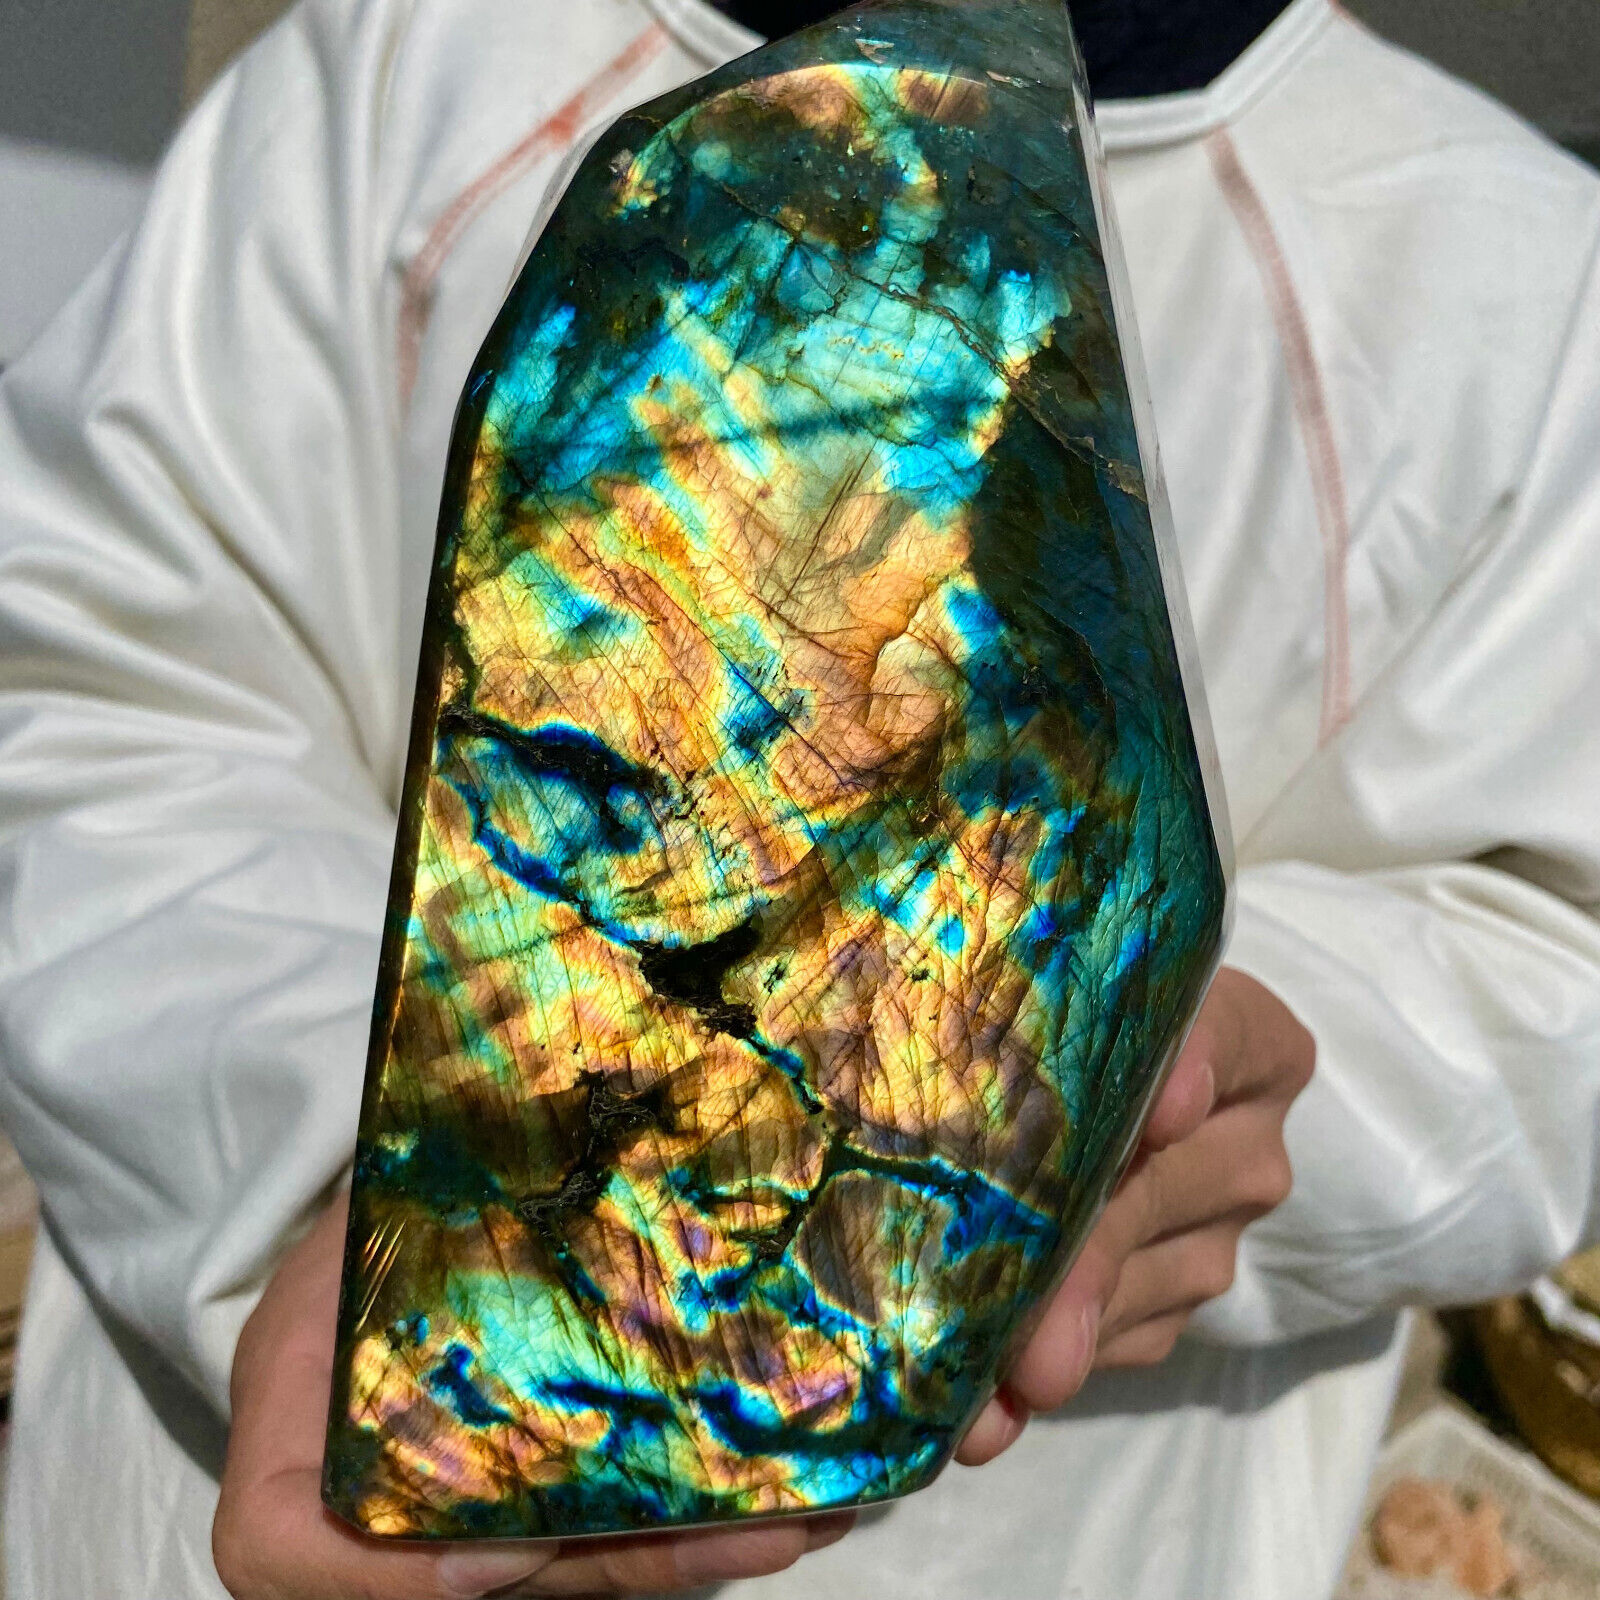 6.2lb Large Natural Labradorite Quartz Crystal Display Mineral Specimen Healing